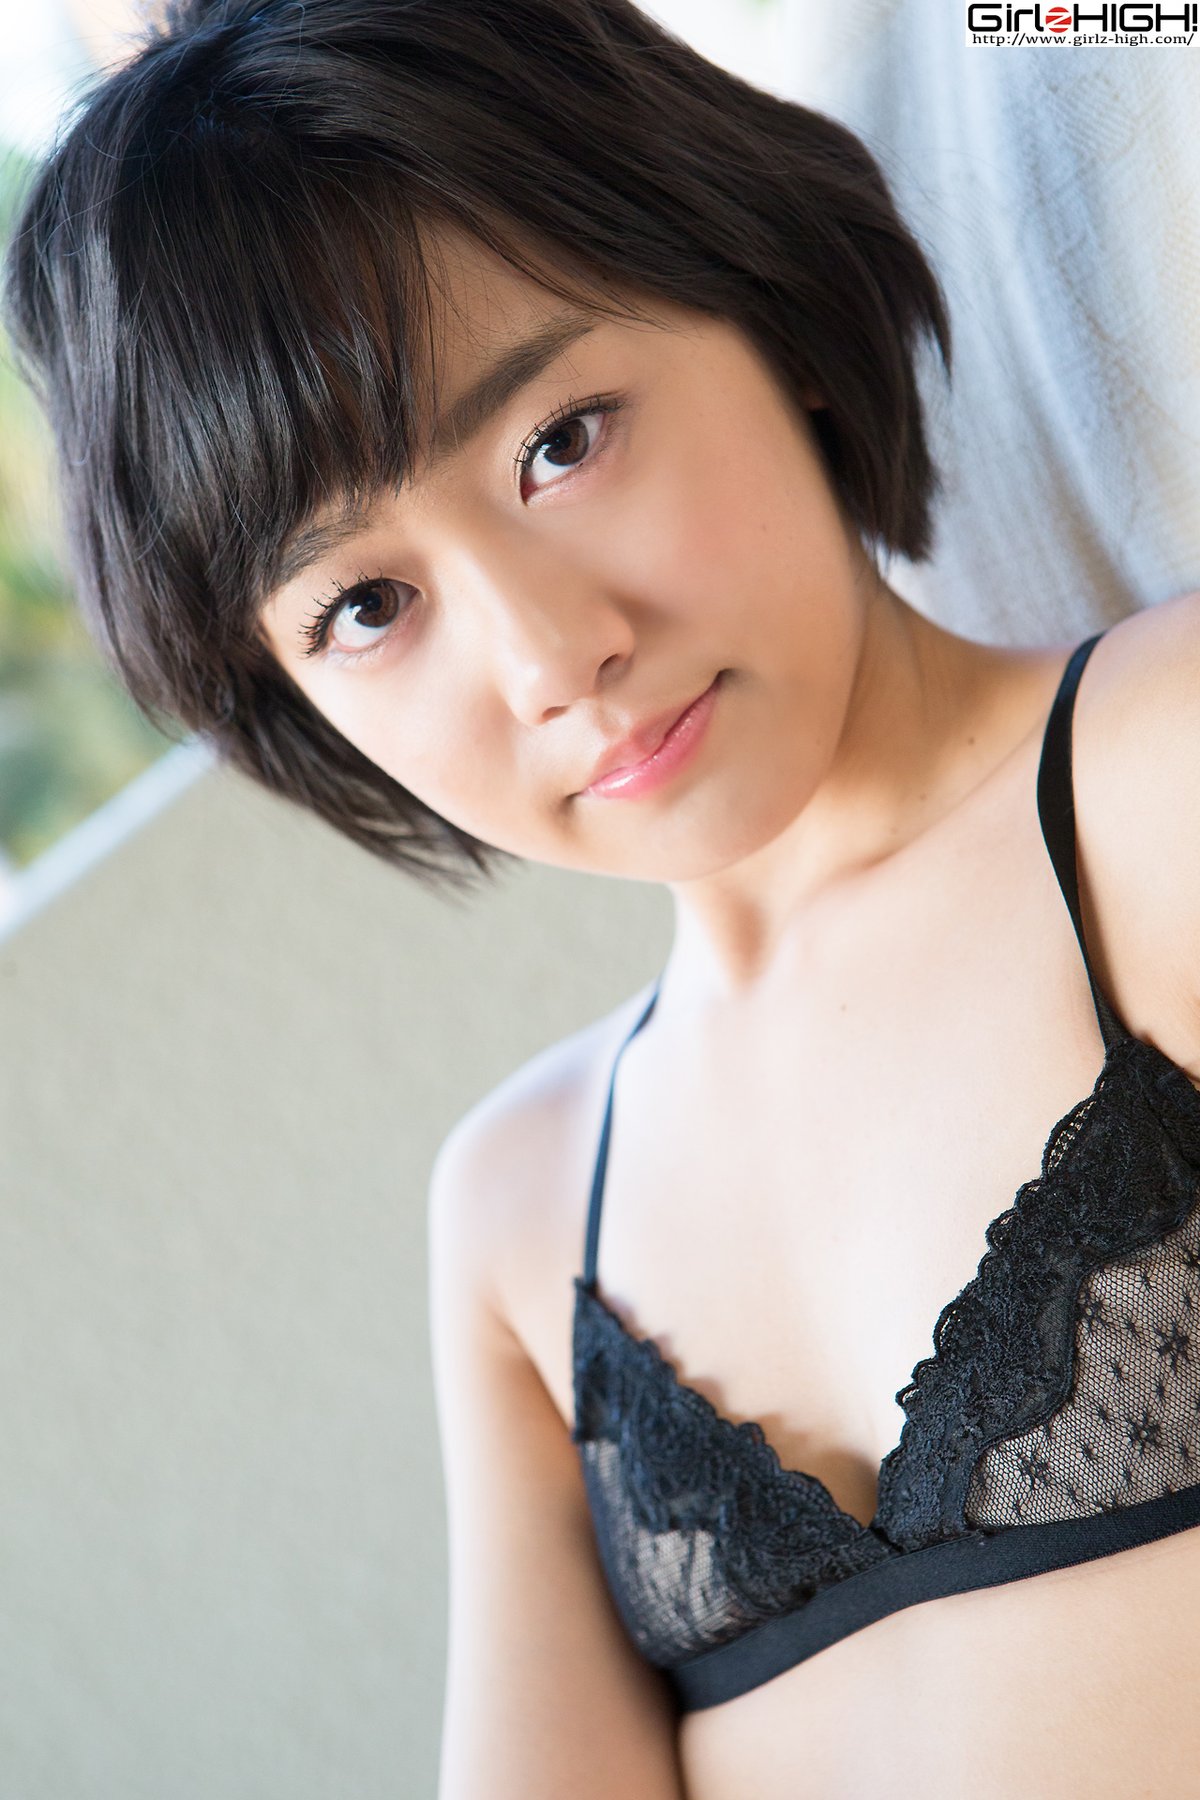 Girlz High Koharu Nishino bkoh_001_004 0024 6236083769.jpg